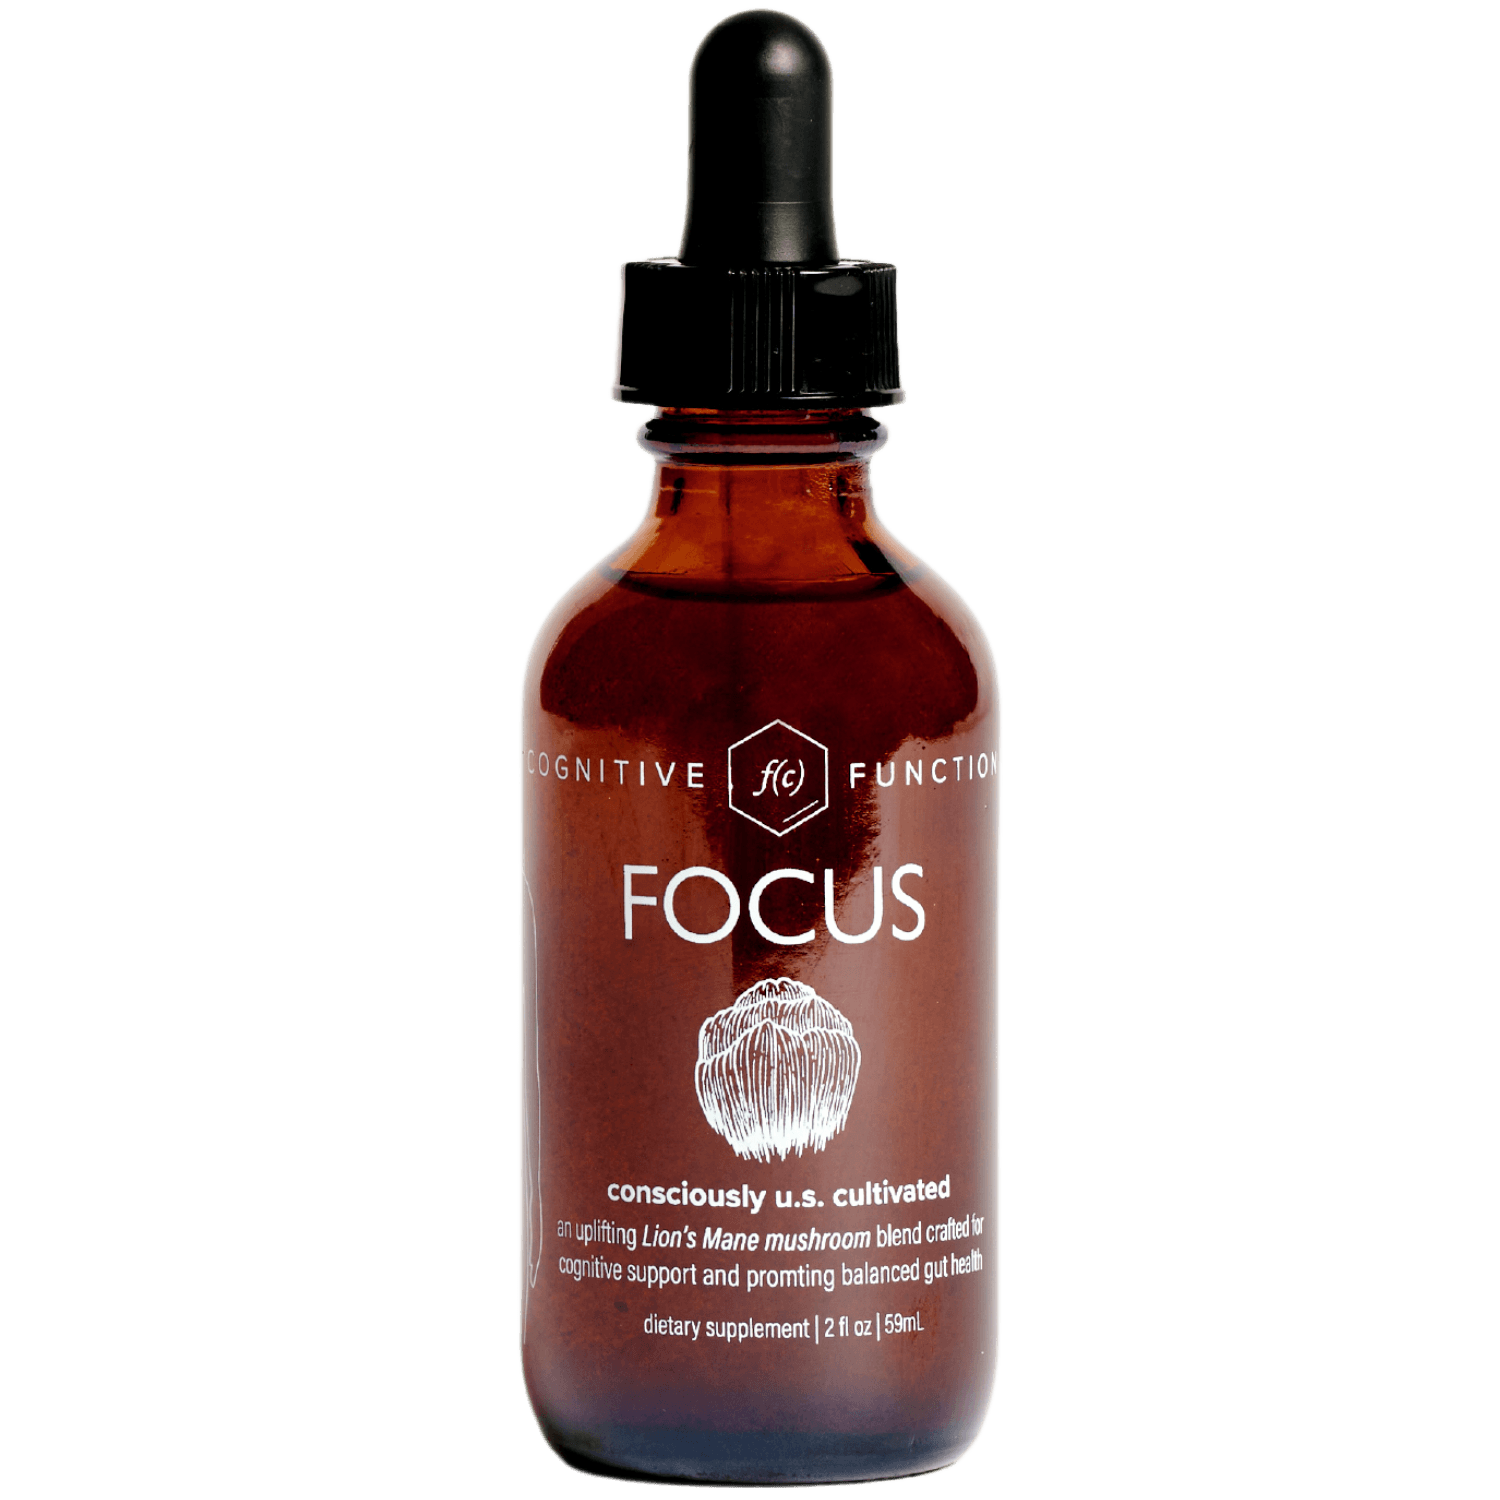 Focus ○ Lion's Mane Mushroom - Cognitive Function